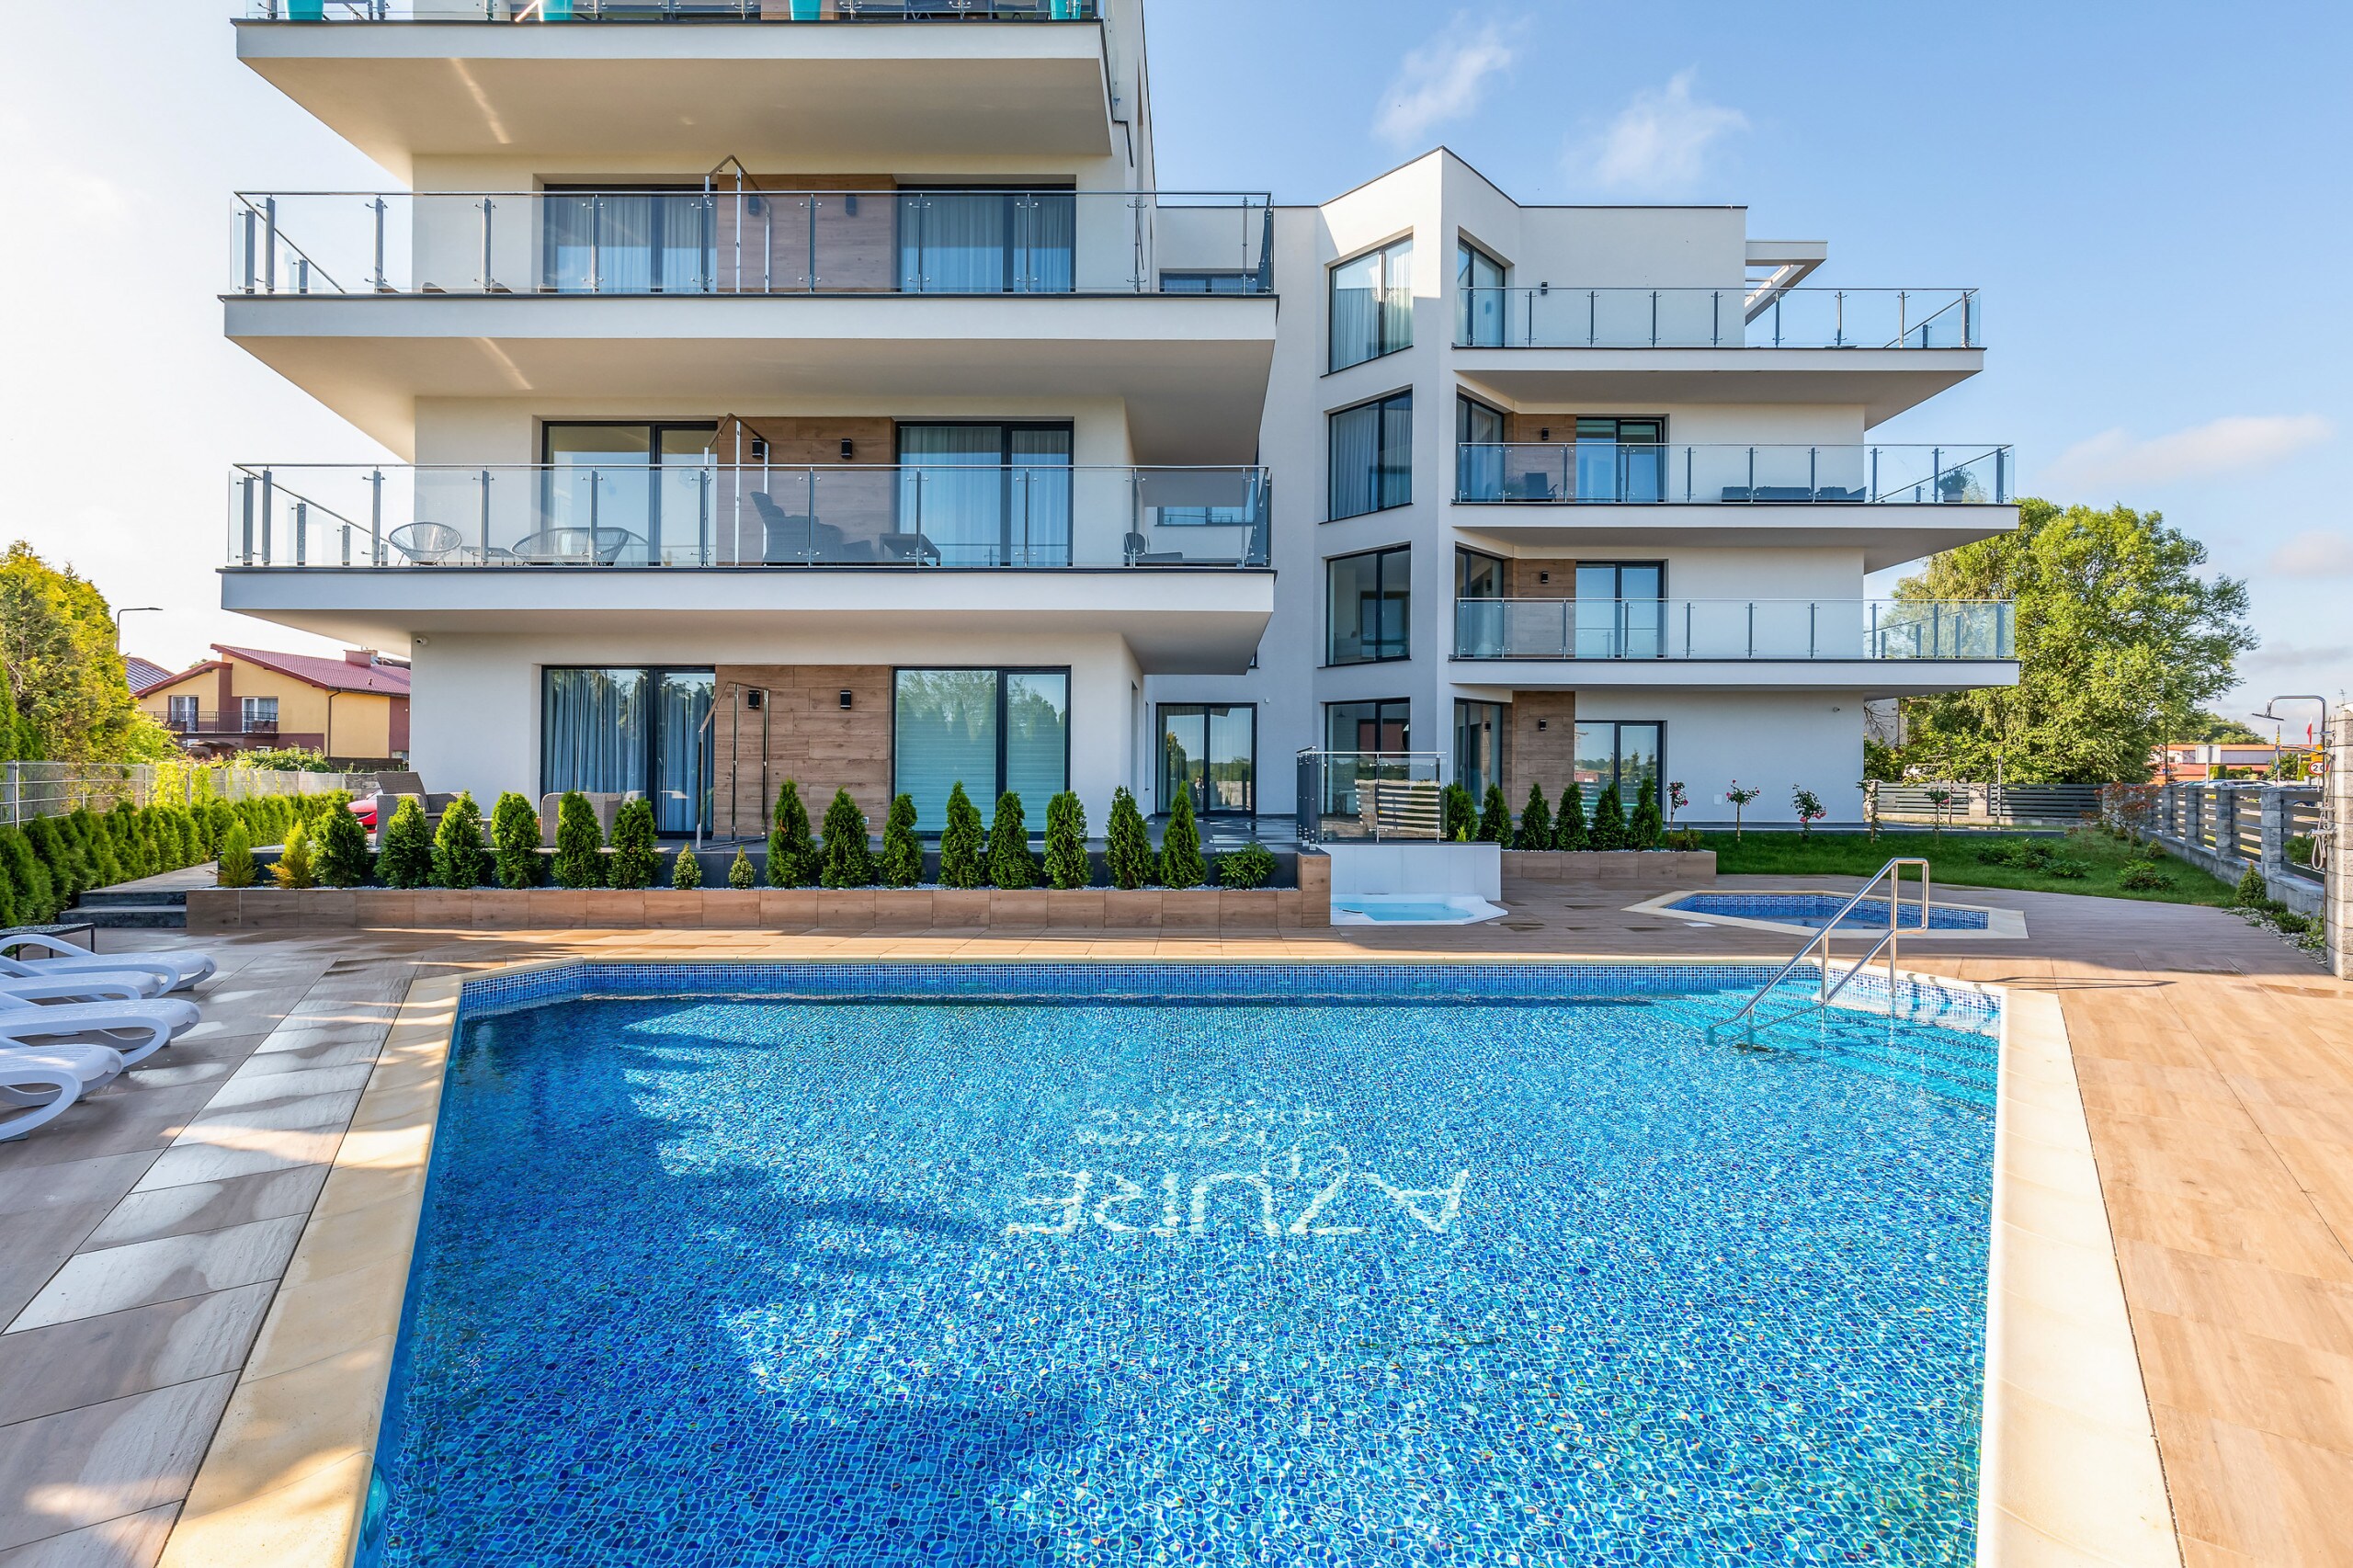 Swimming pool of Azure Apartment 7 apartment building